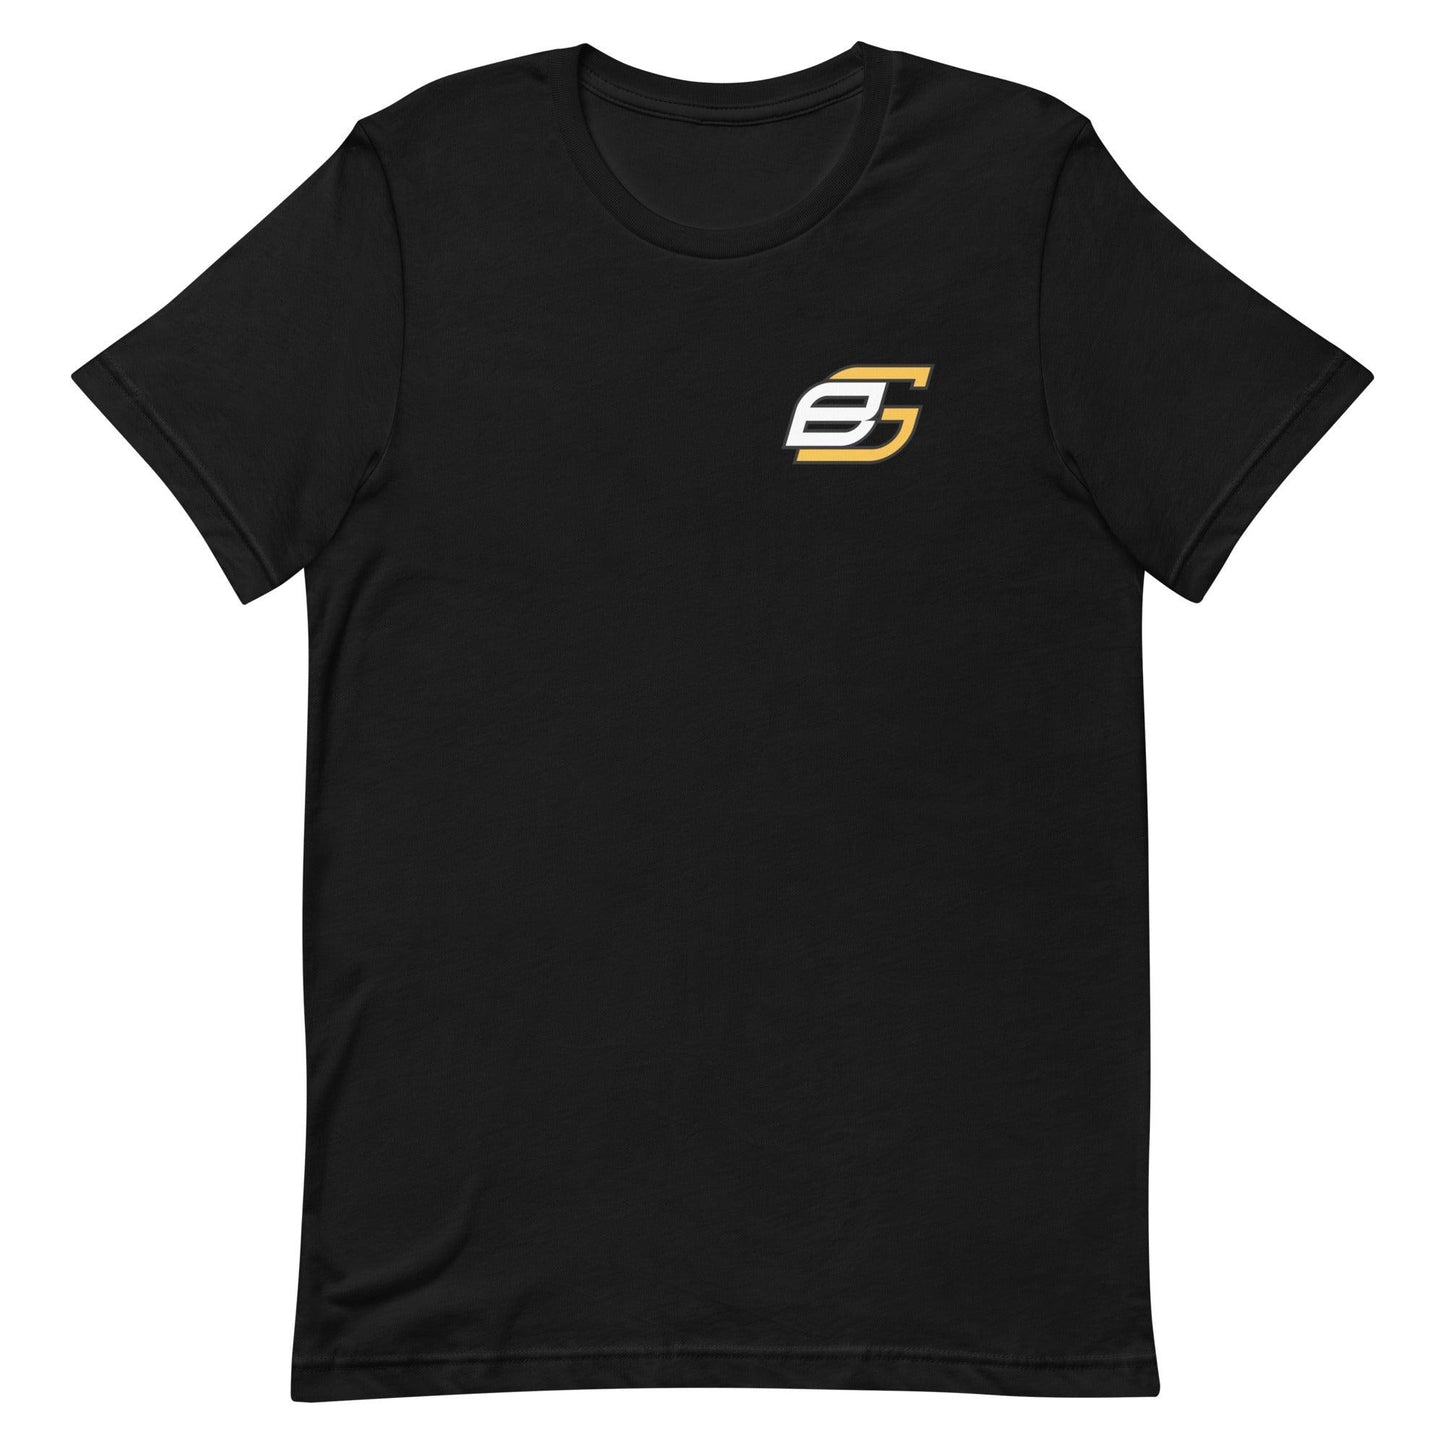 Ben Gamel "Elite" t-shirt - Fan Arch